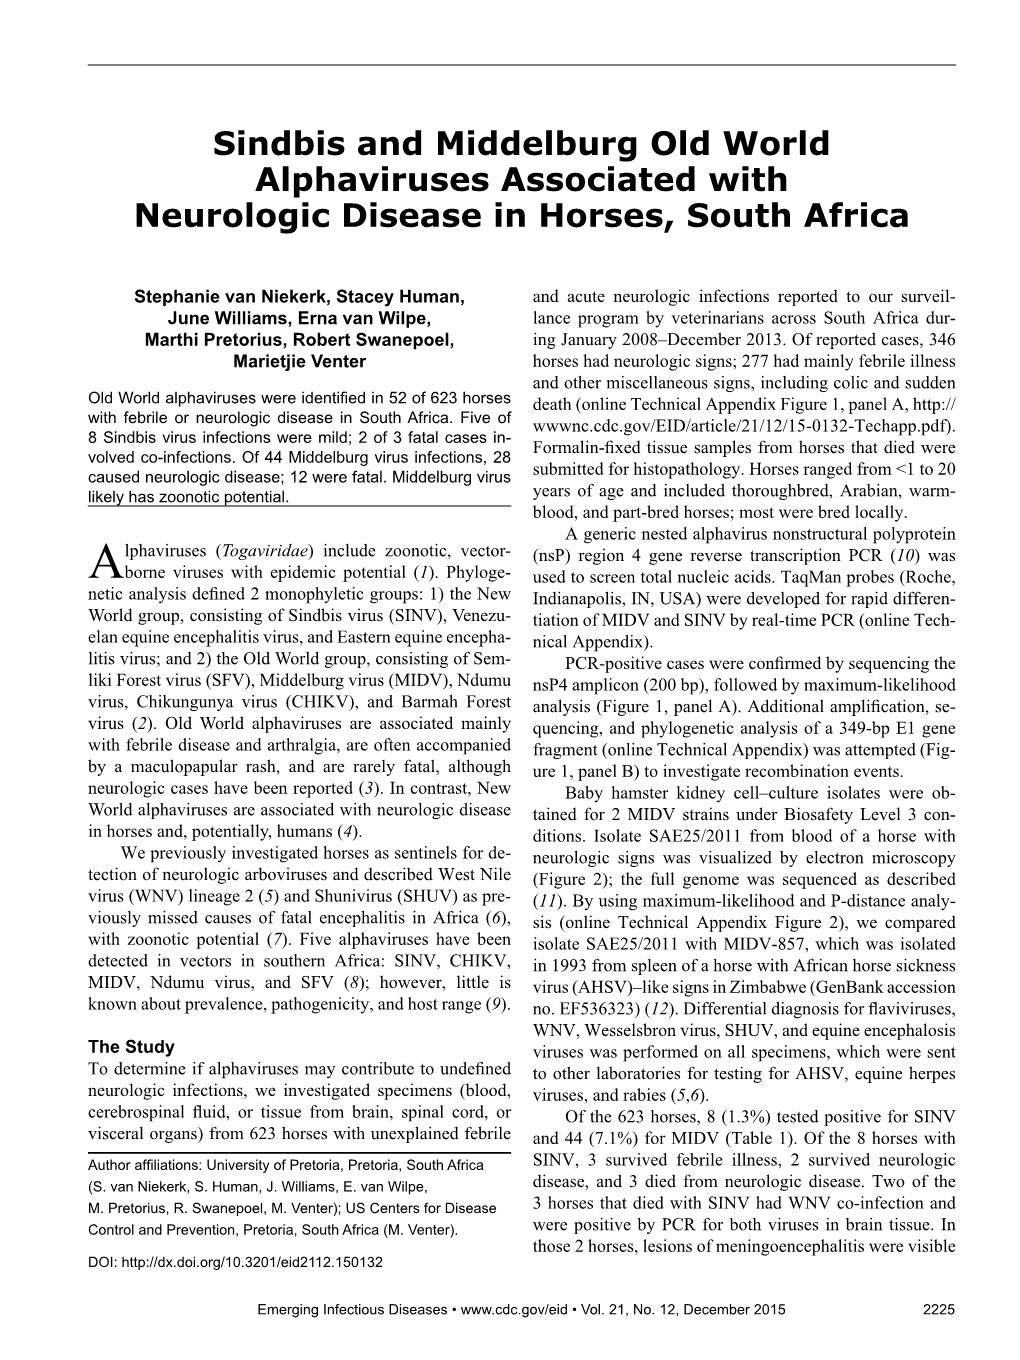 Sindbis and Middelburg Old World Alphaviruses Associated with Neurologic Disease in Horses, South Africa